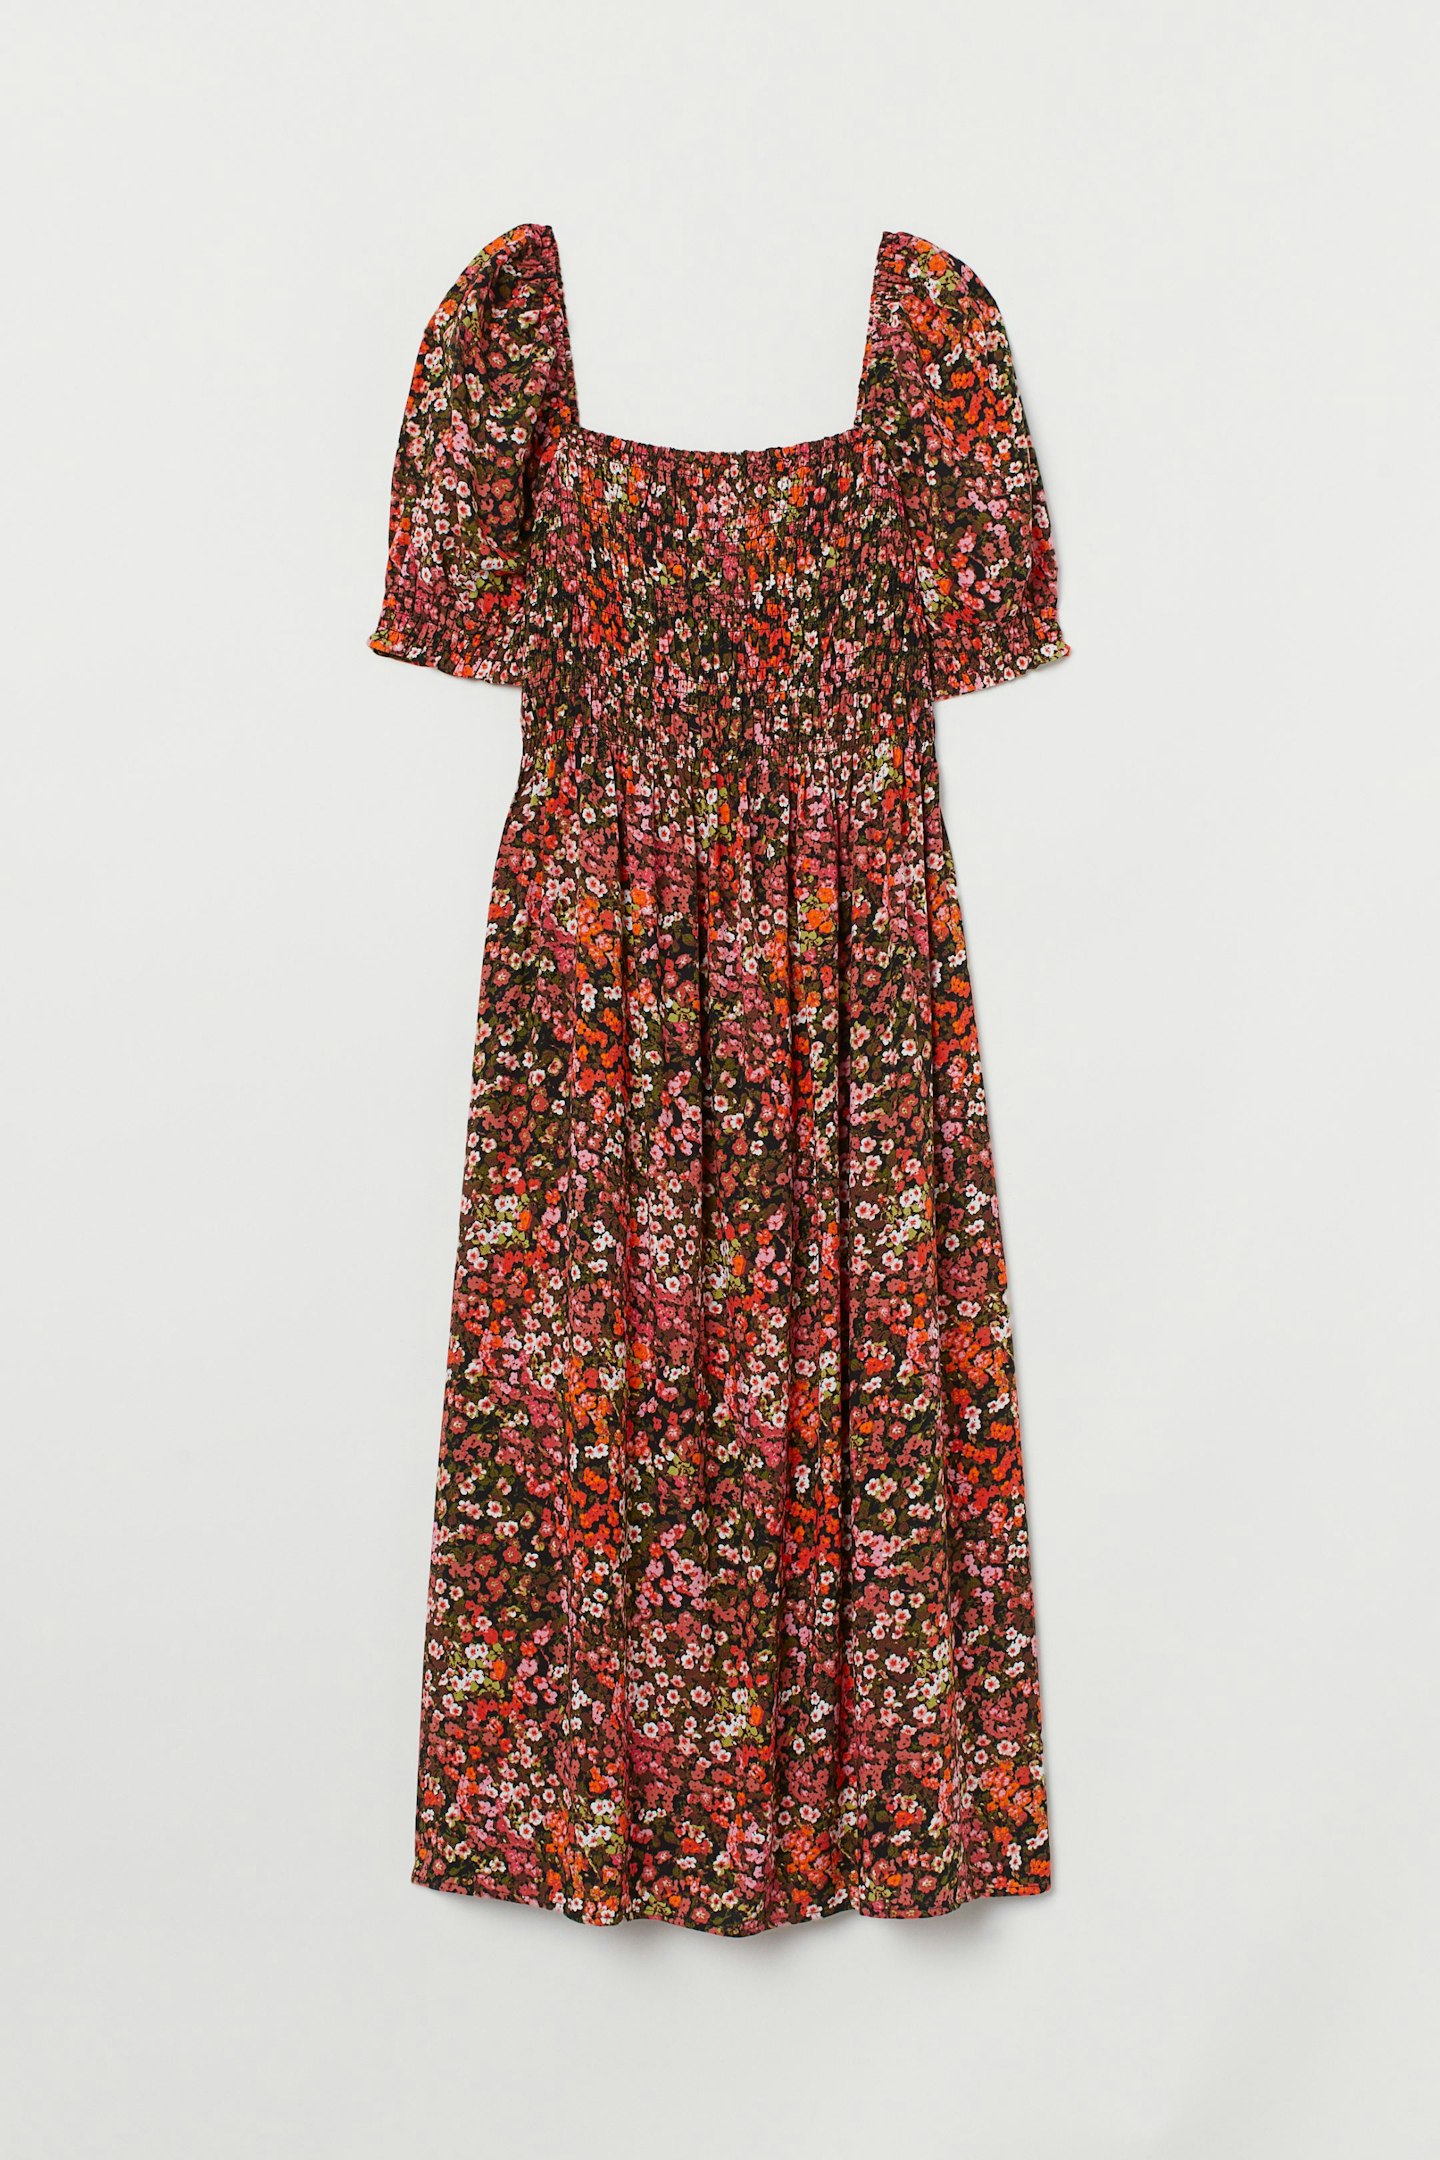 H&M, Puffed Sleeve Dress, £19.99